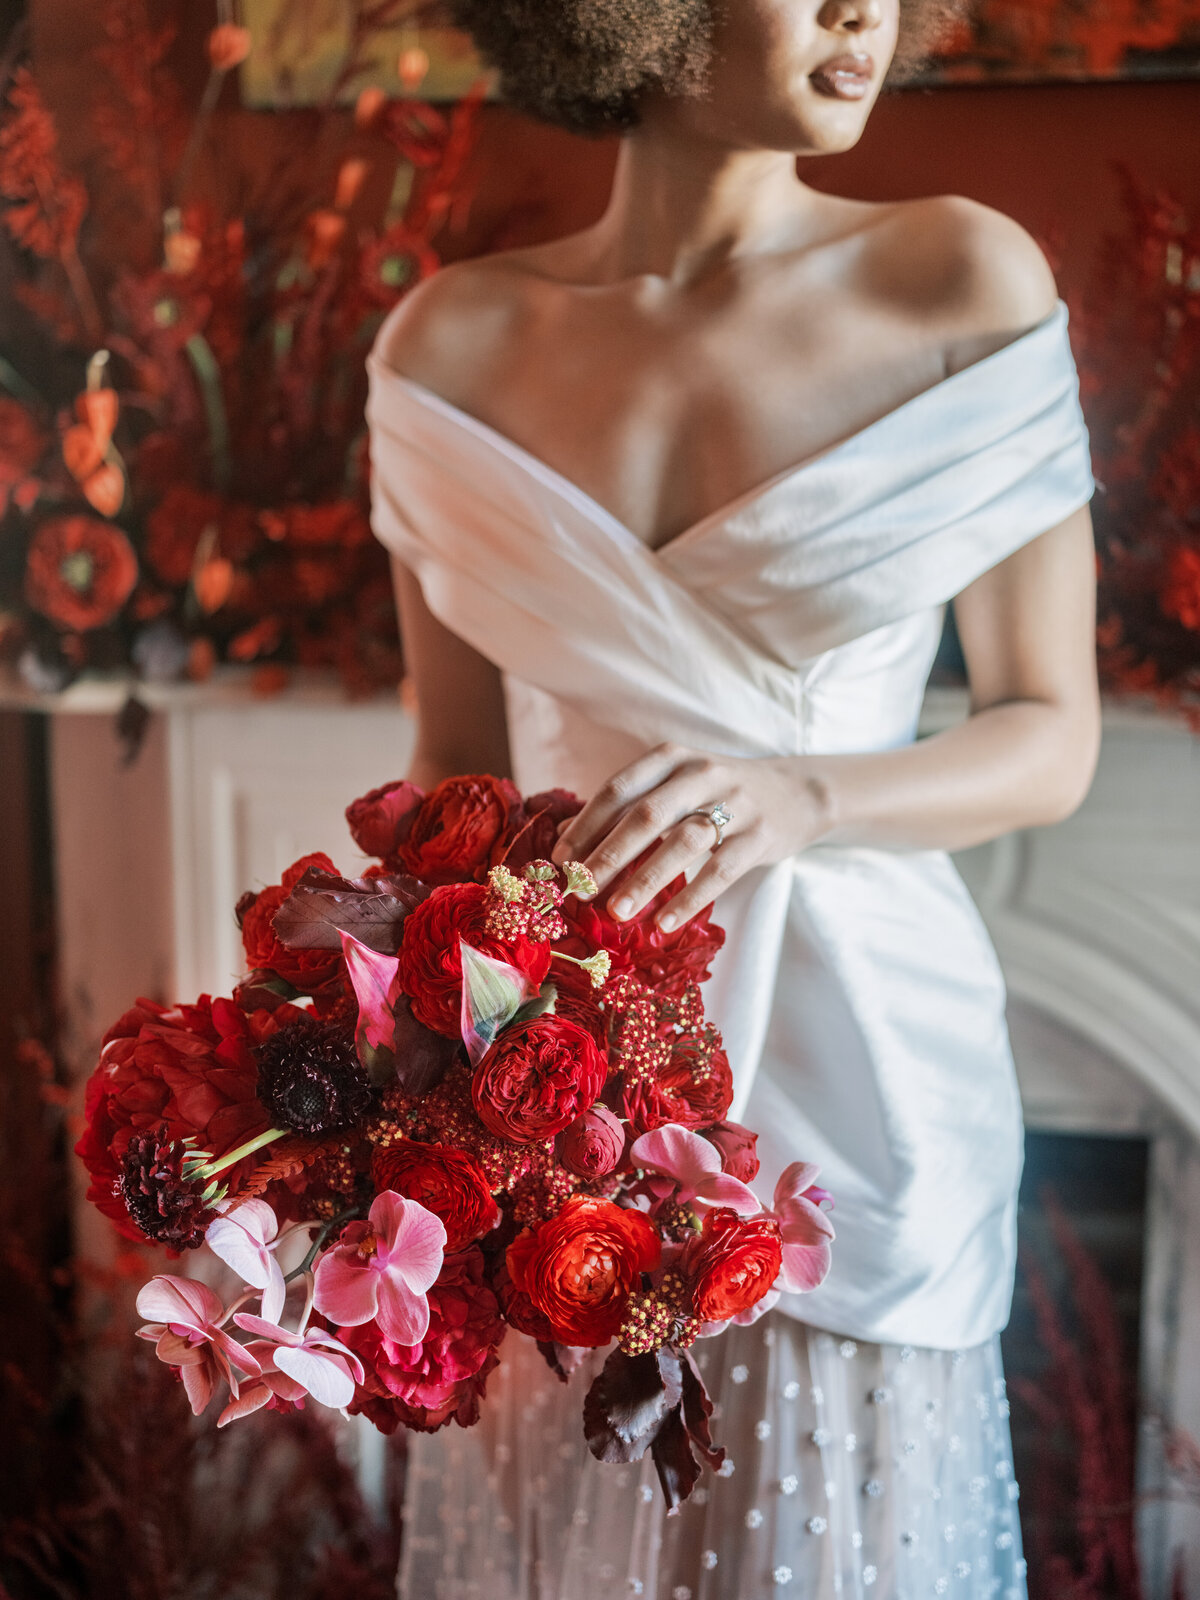 max-owens-design-new-orleans-florist-07-red-bouquet